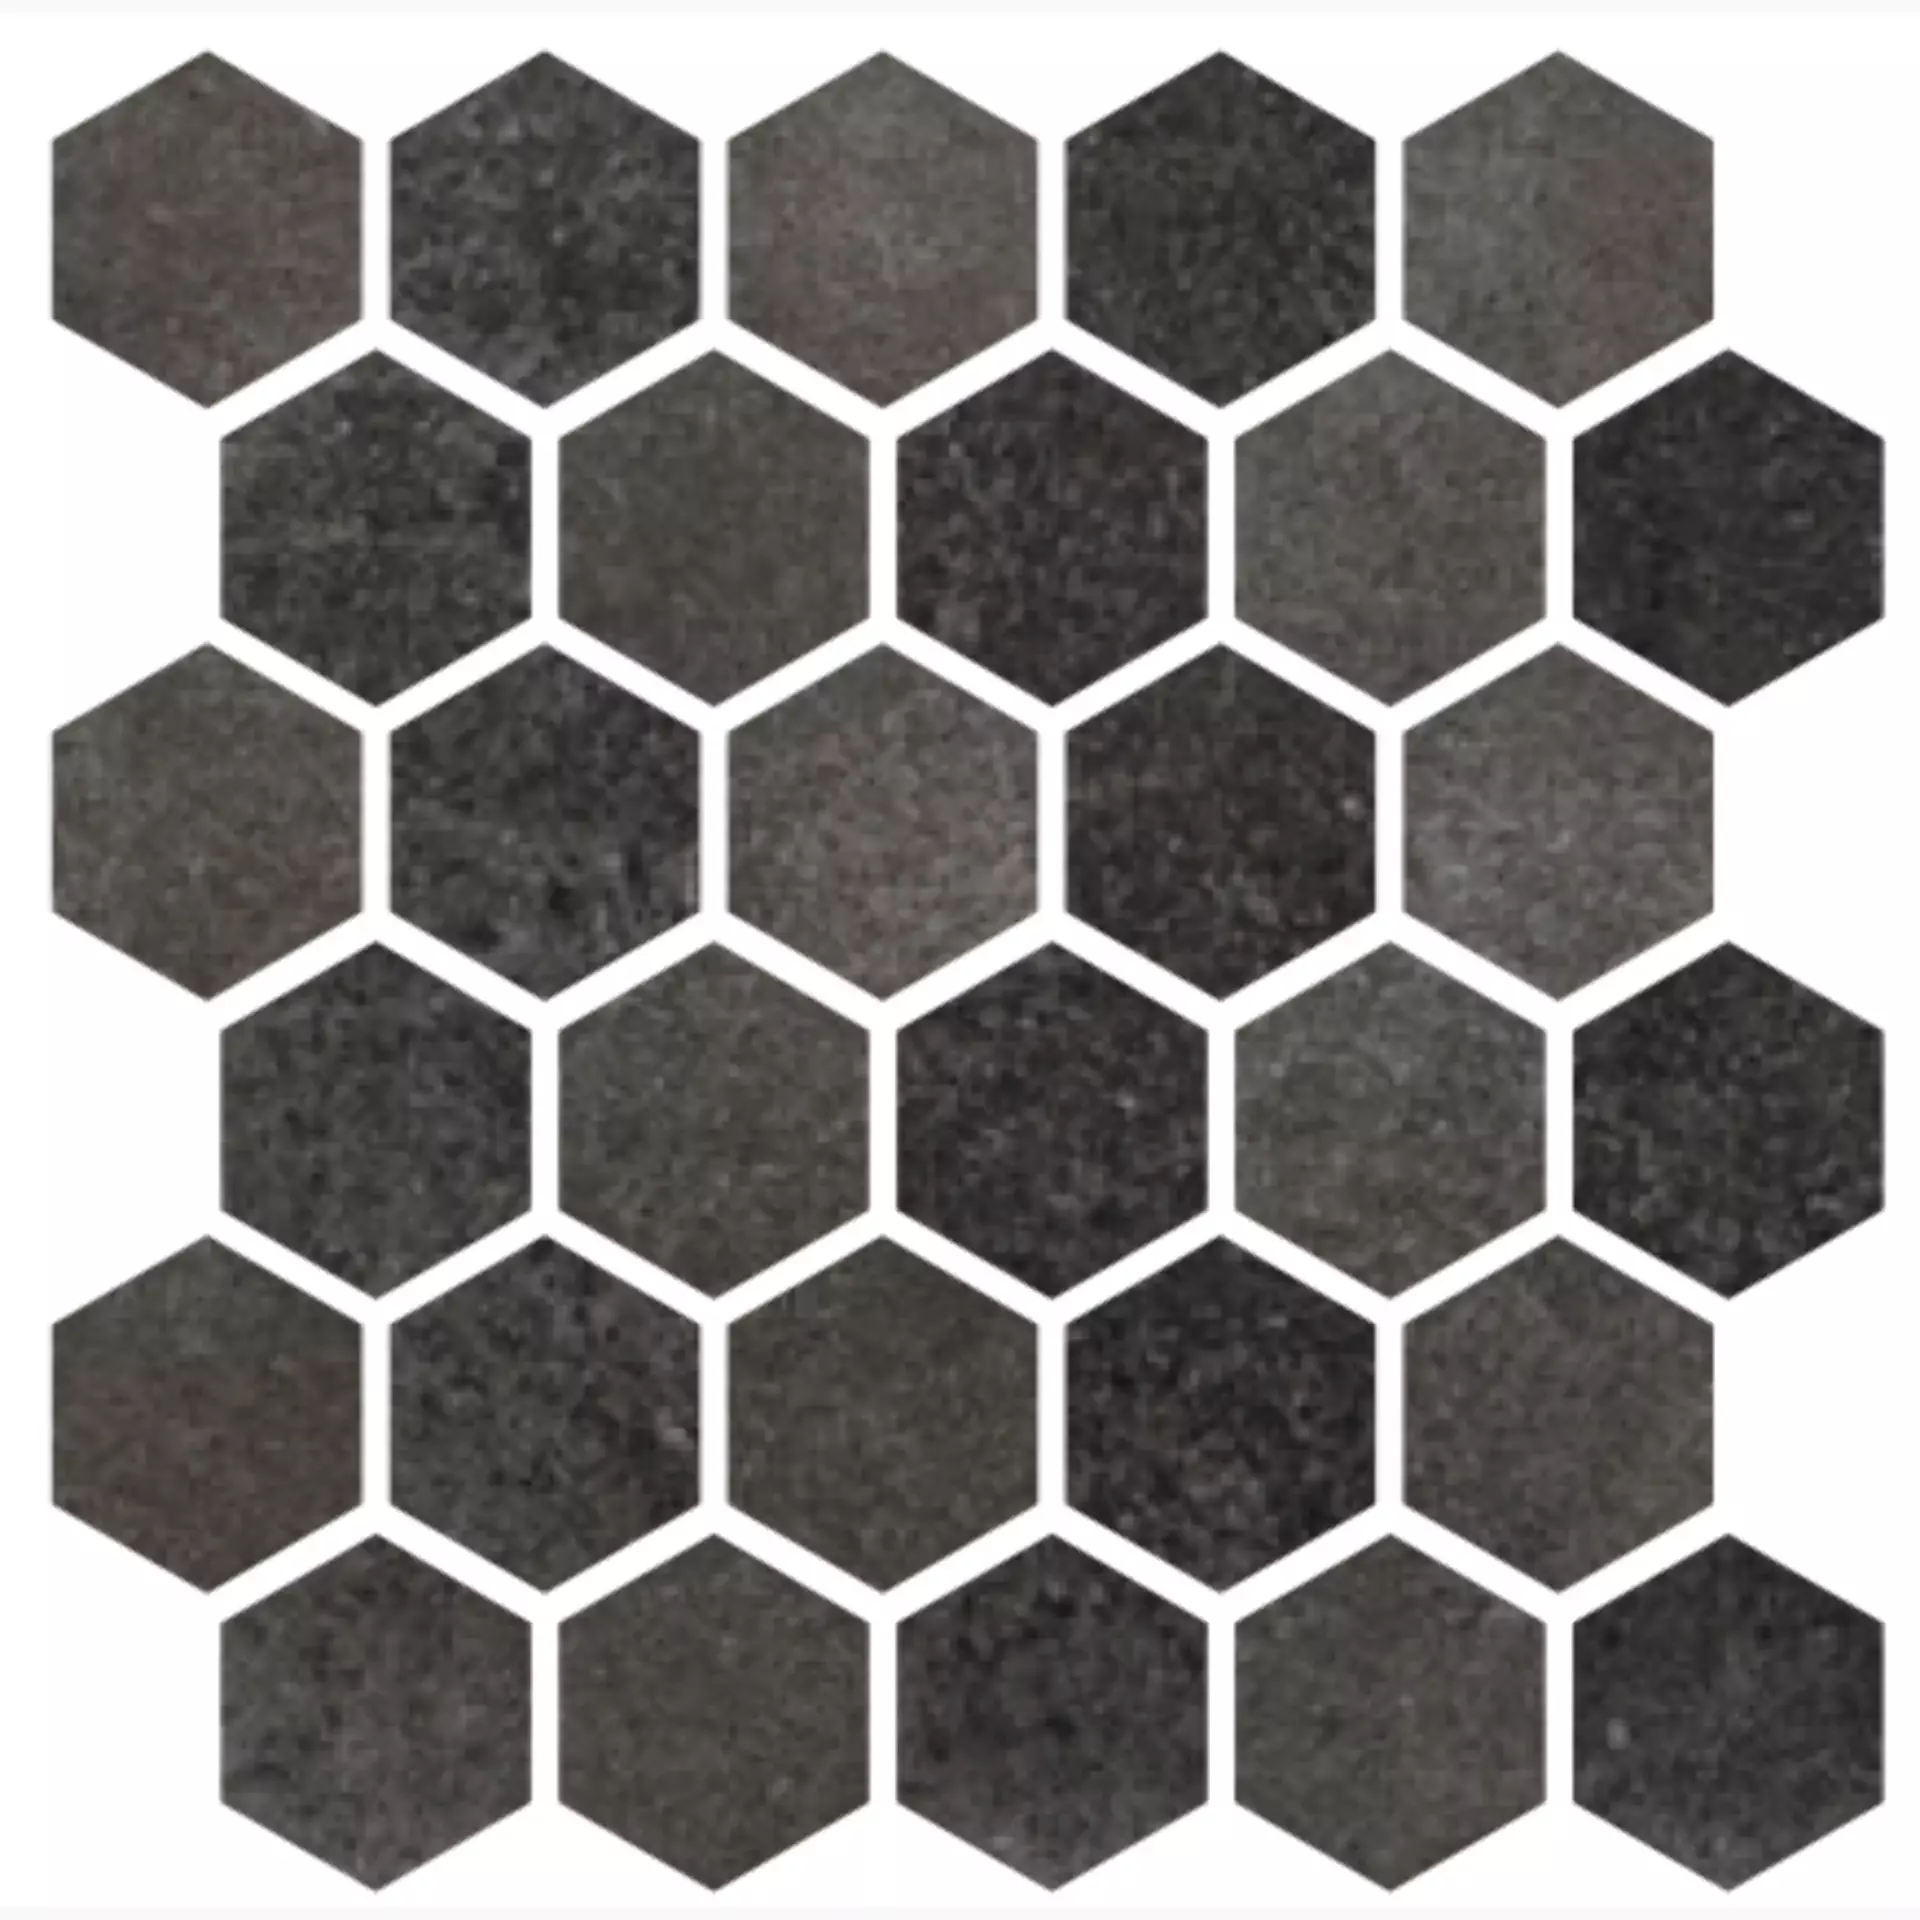 CIR Materia Prima Black Storm Naturale Mosaic Hexagon 1069909 27x27cm 10mm